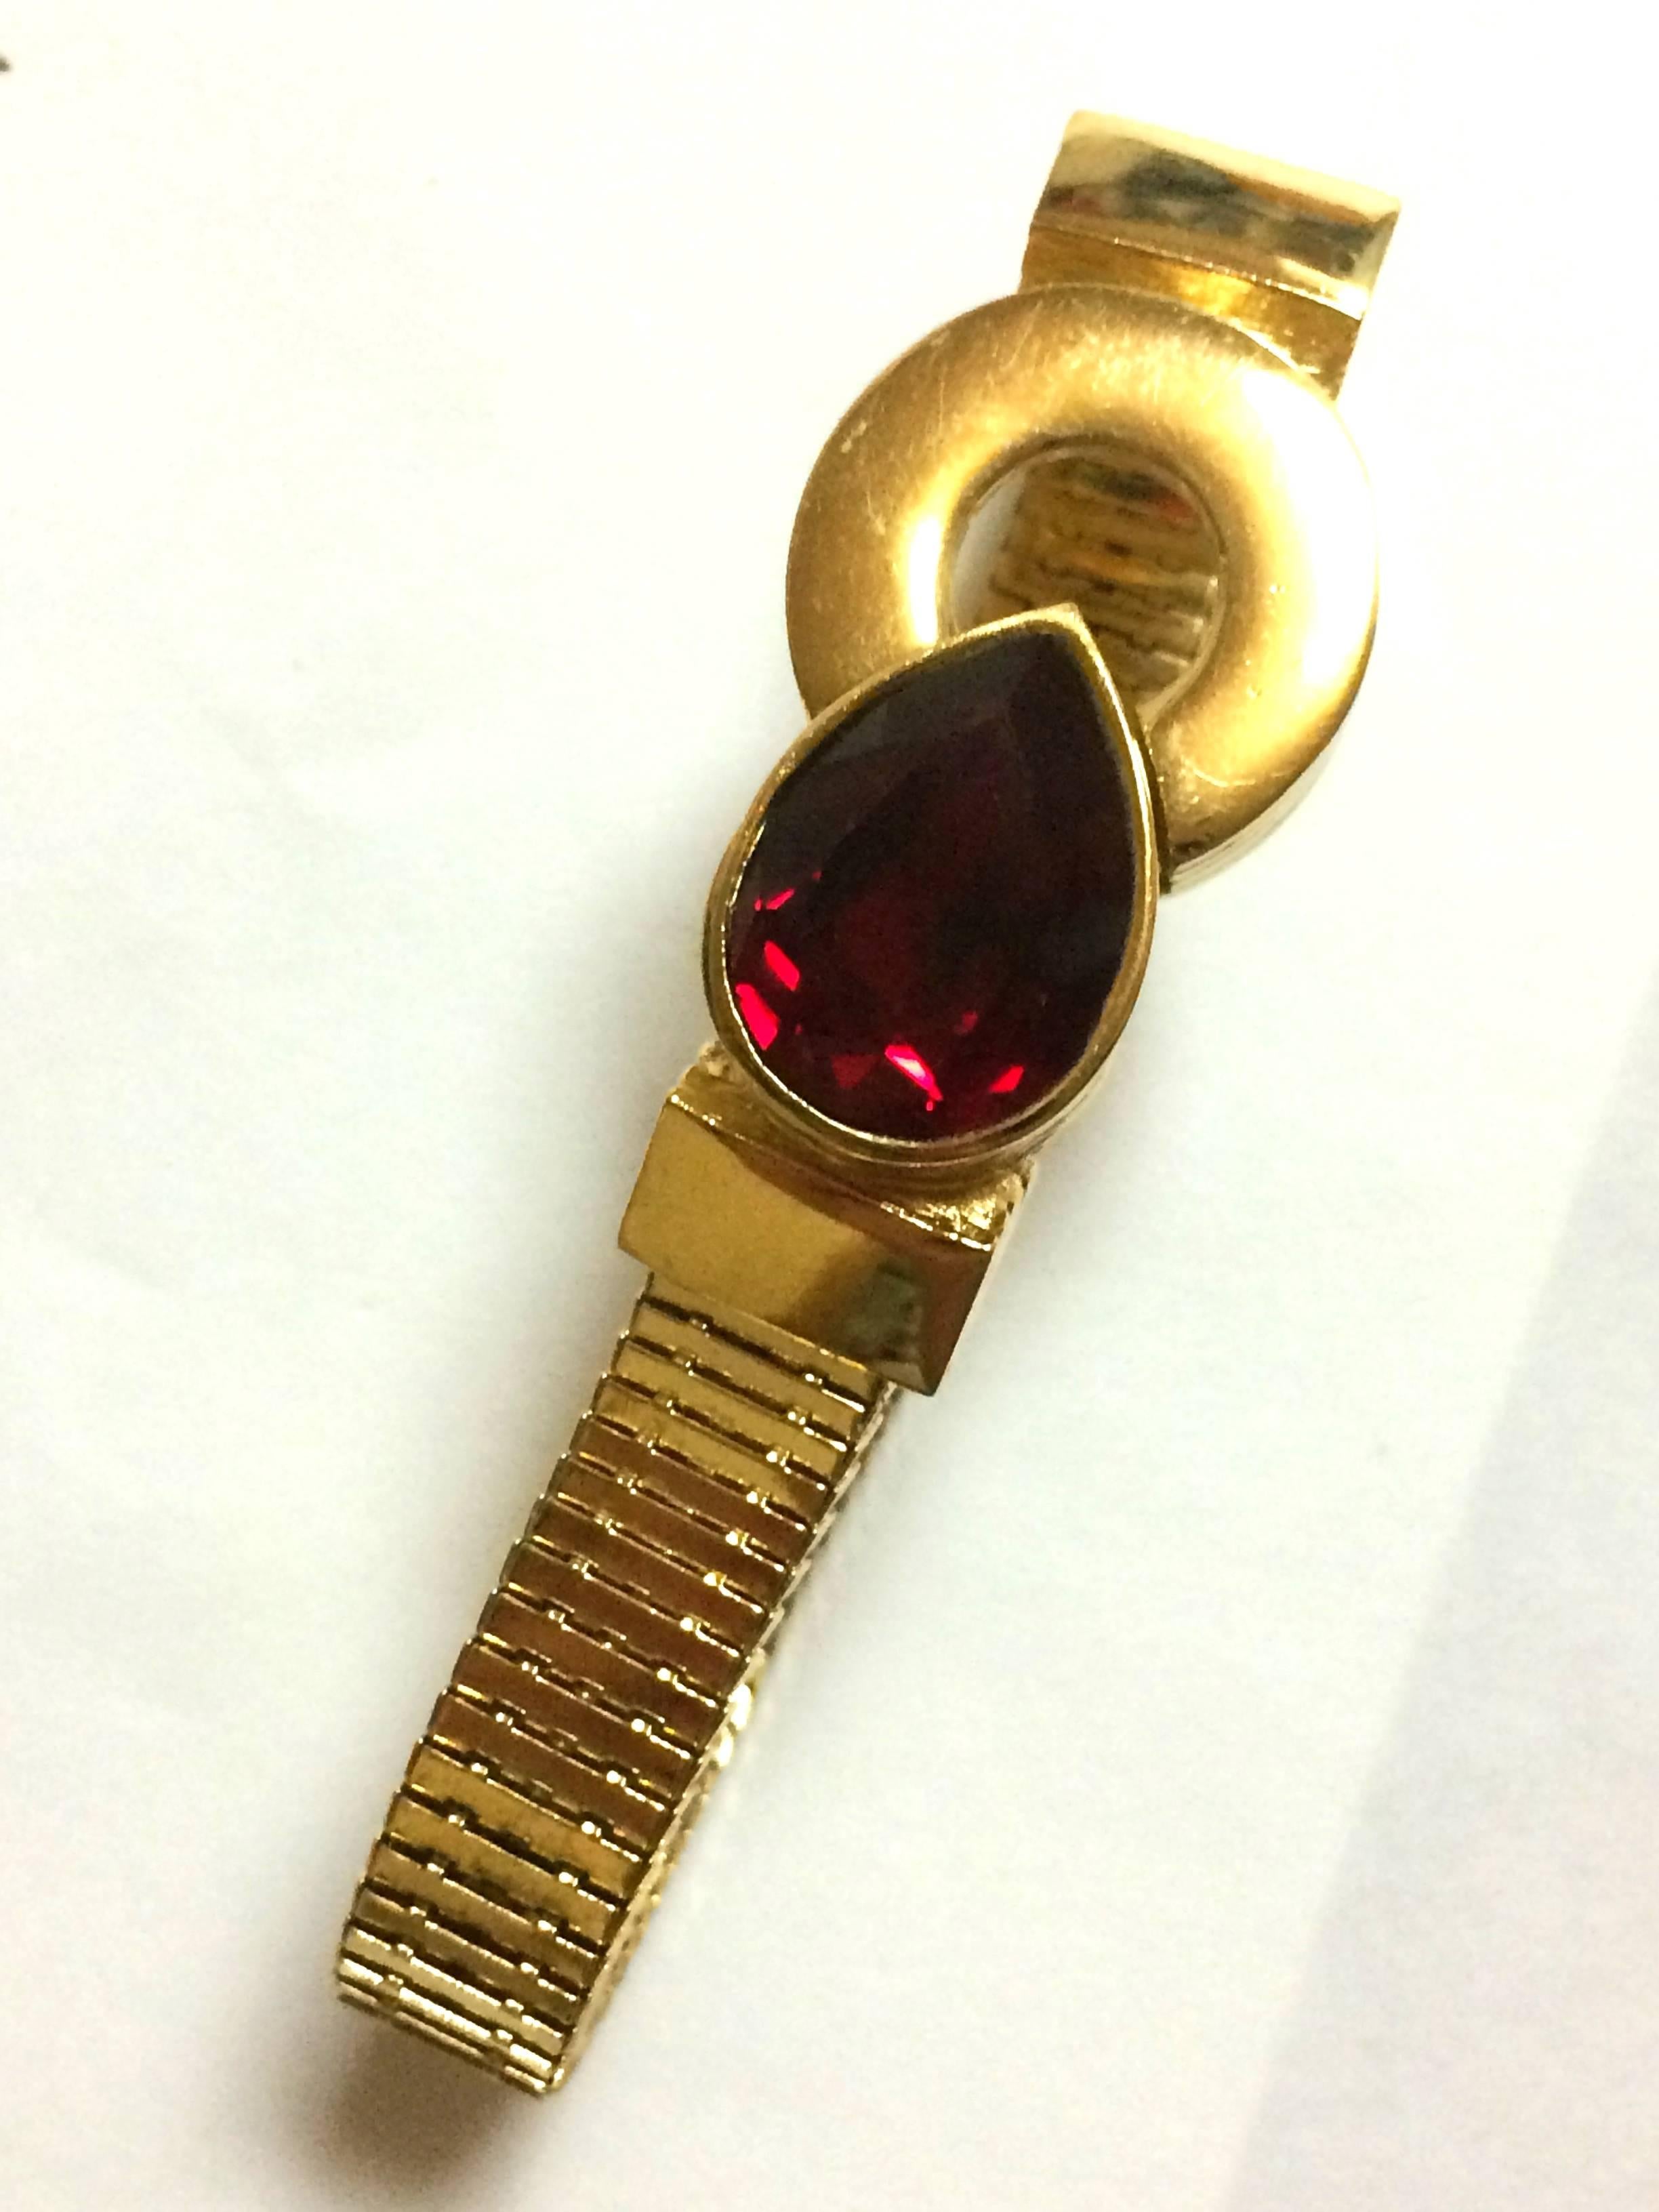 MINT. Vintage Givenchy golden flat chain bracelet with red Swarovski teardrop. 5